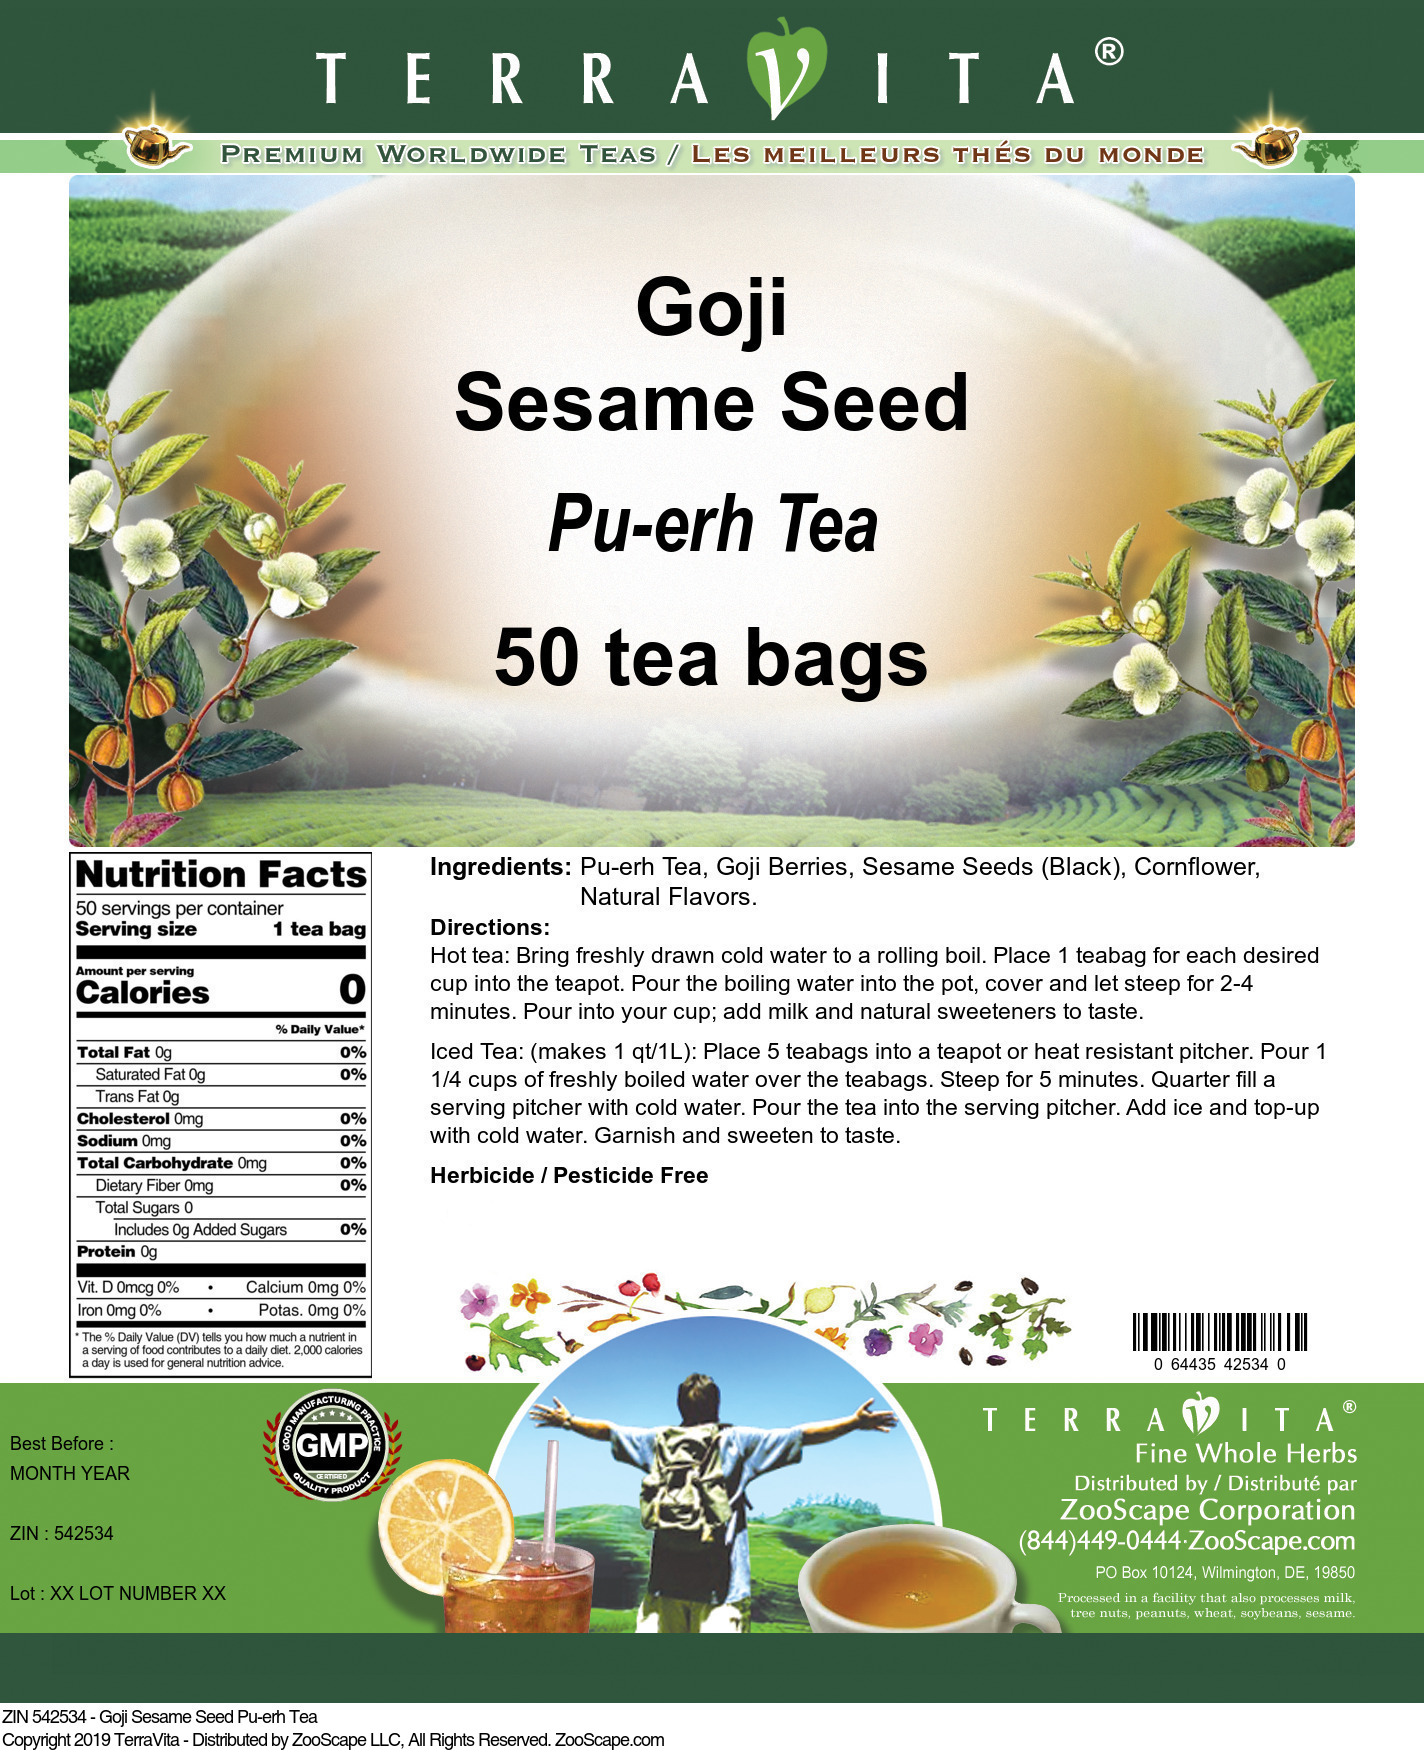 Goji Sesame Seed Pu-erh Tea - Label